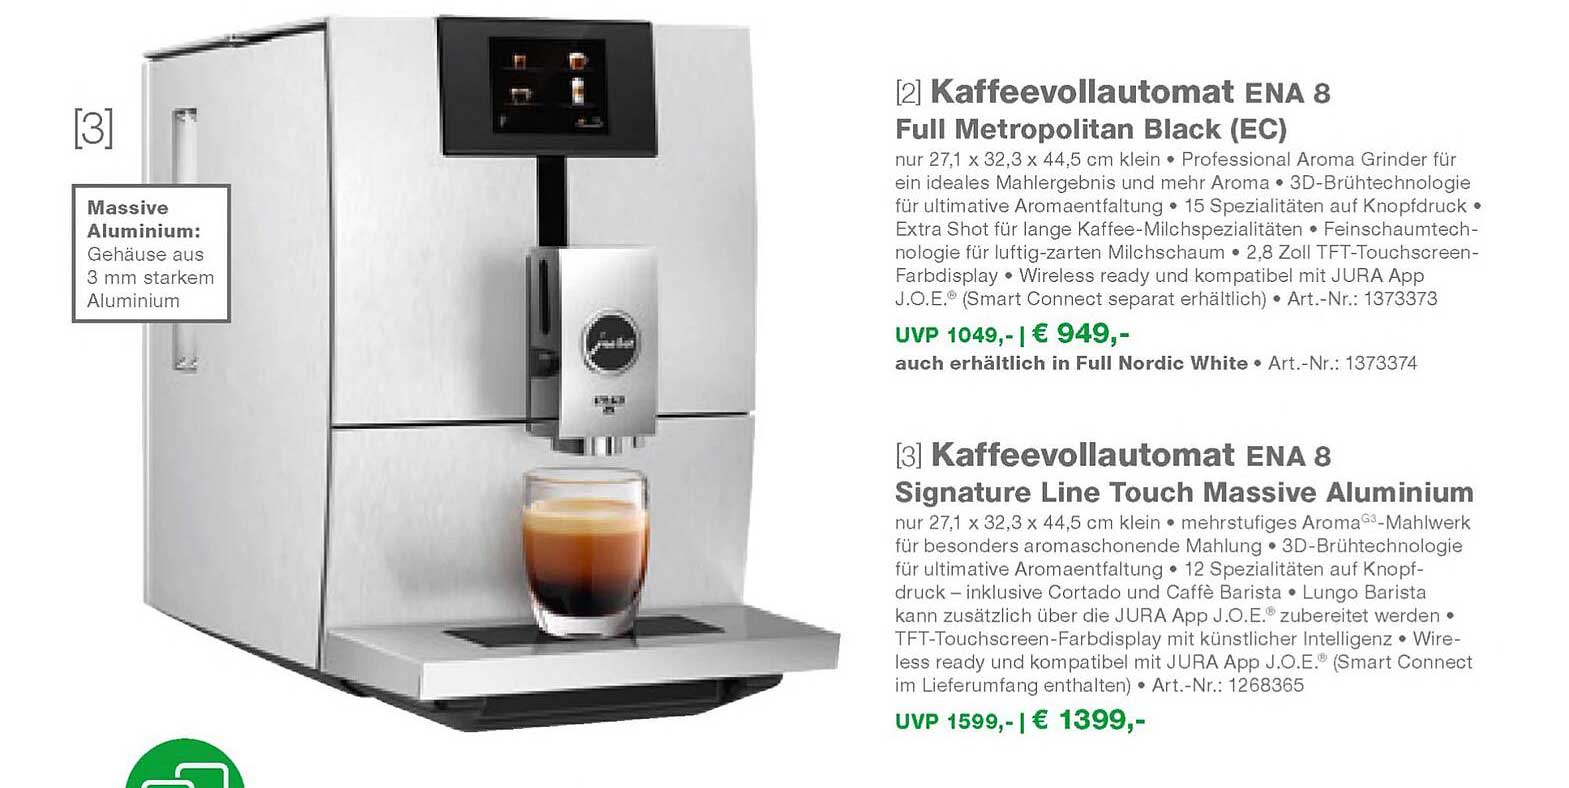 EP Jura Kaffeevollautomat Ena 8 Full Metropolitan Black (ec) Oder Ena 8 Signature Line Touch Massive Aluminium